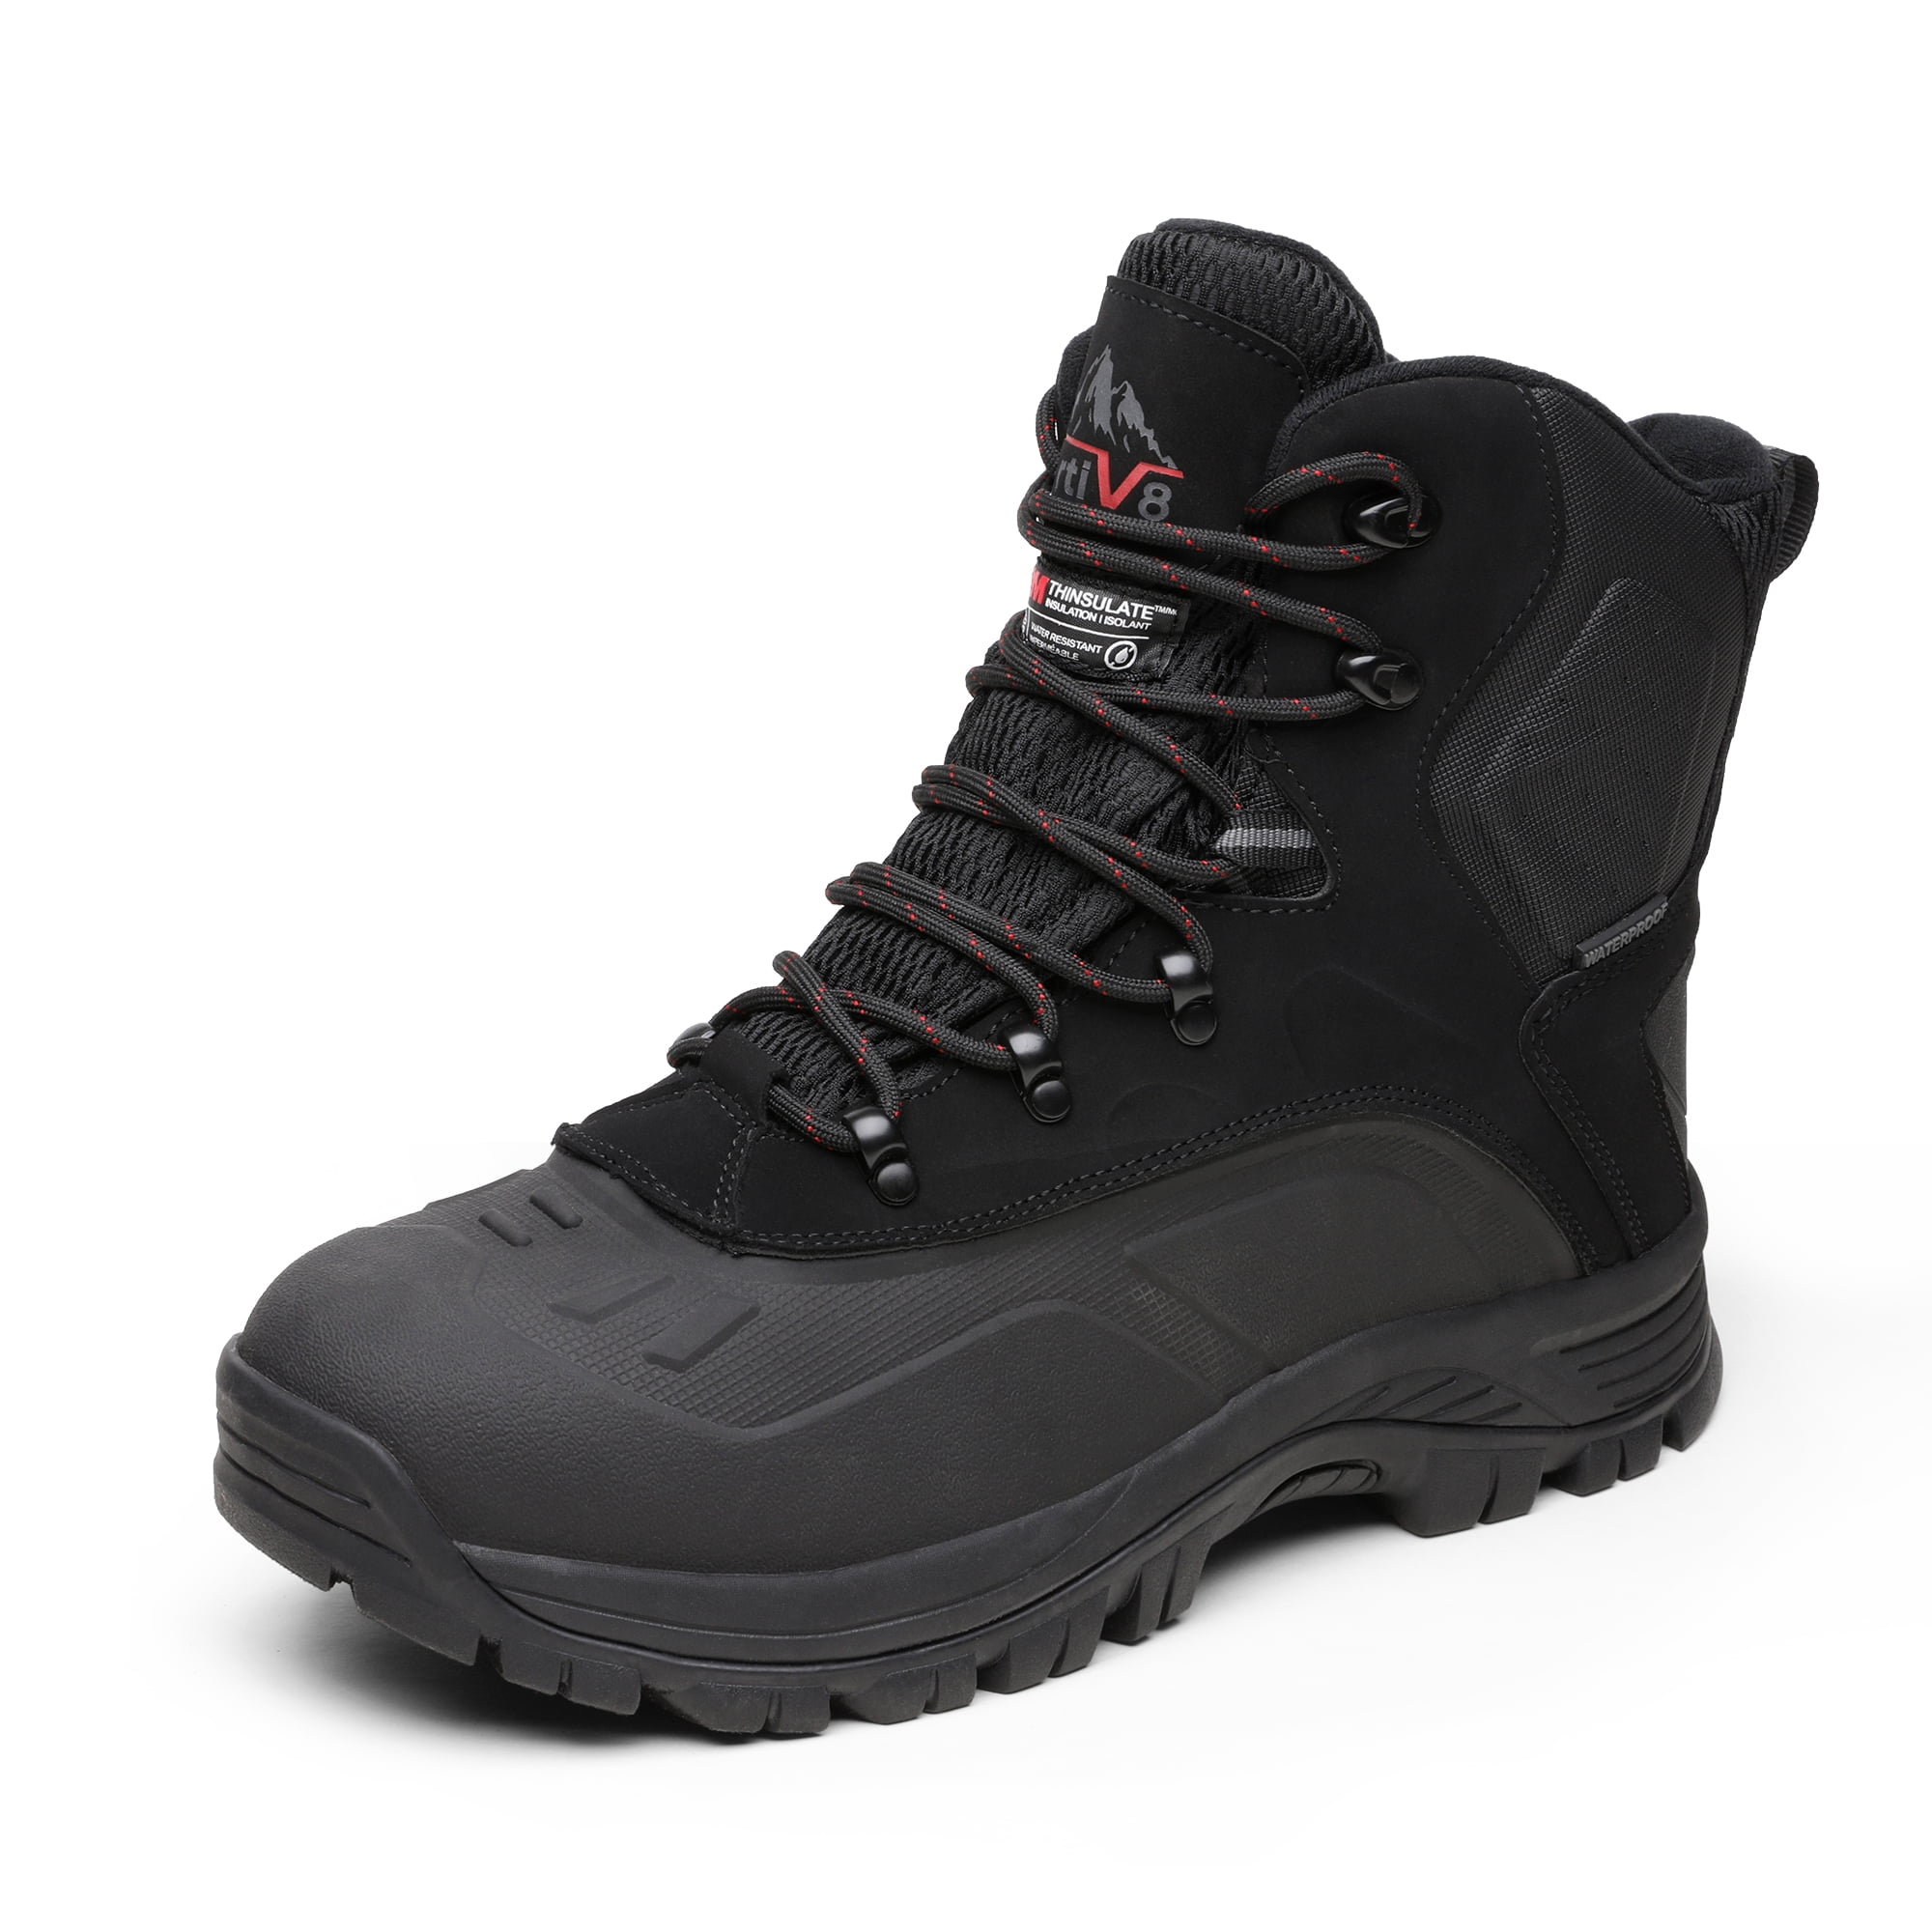 Quickshark Mens Work Boots Outdoor Hiking Boot Trekking Walking Camping Traveling Casual Wide Water-Resistant Shoes 